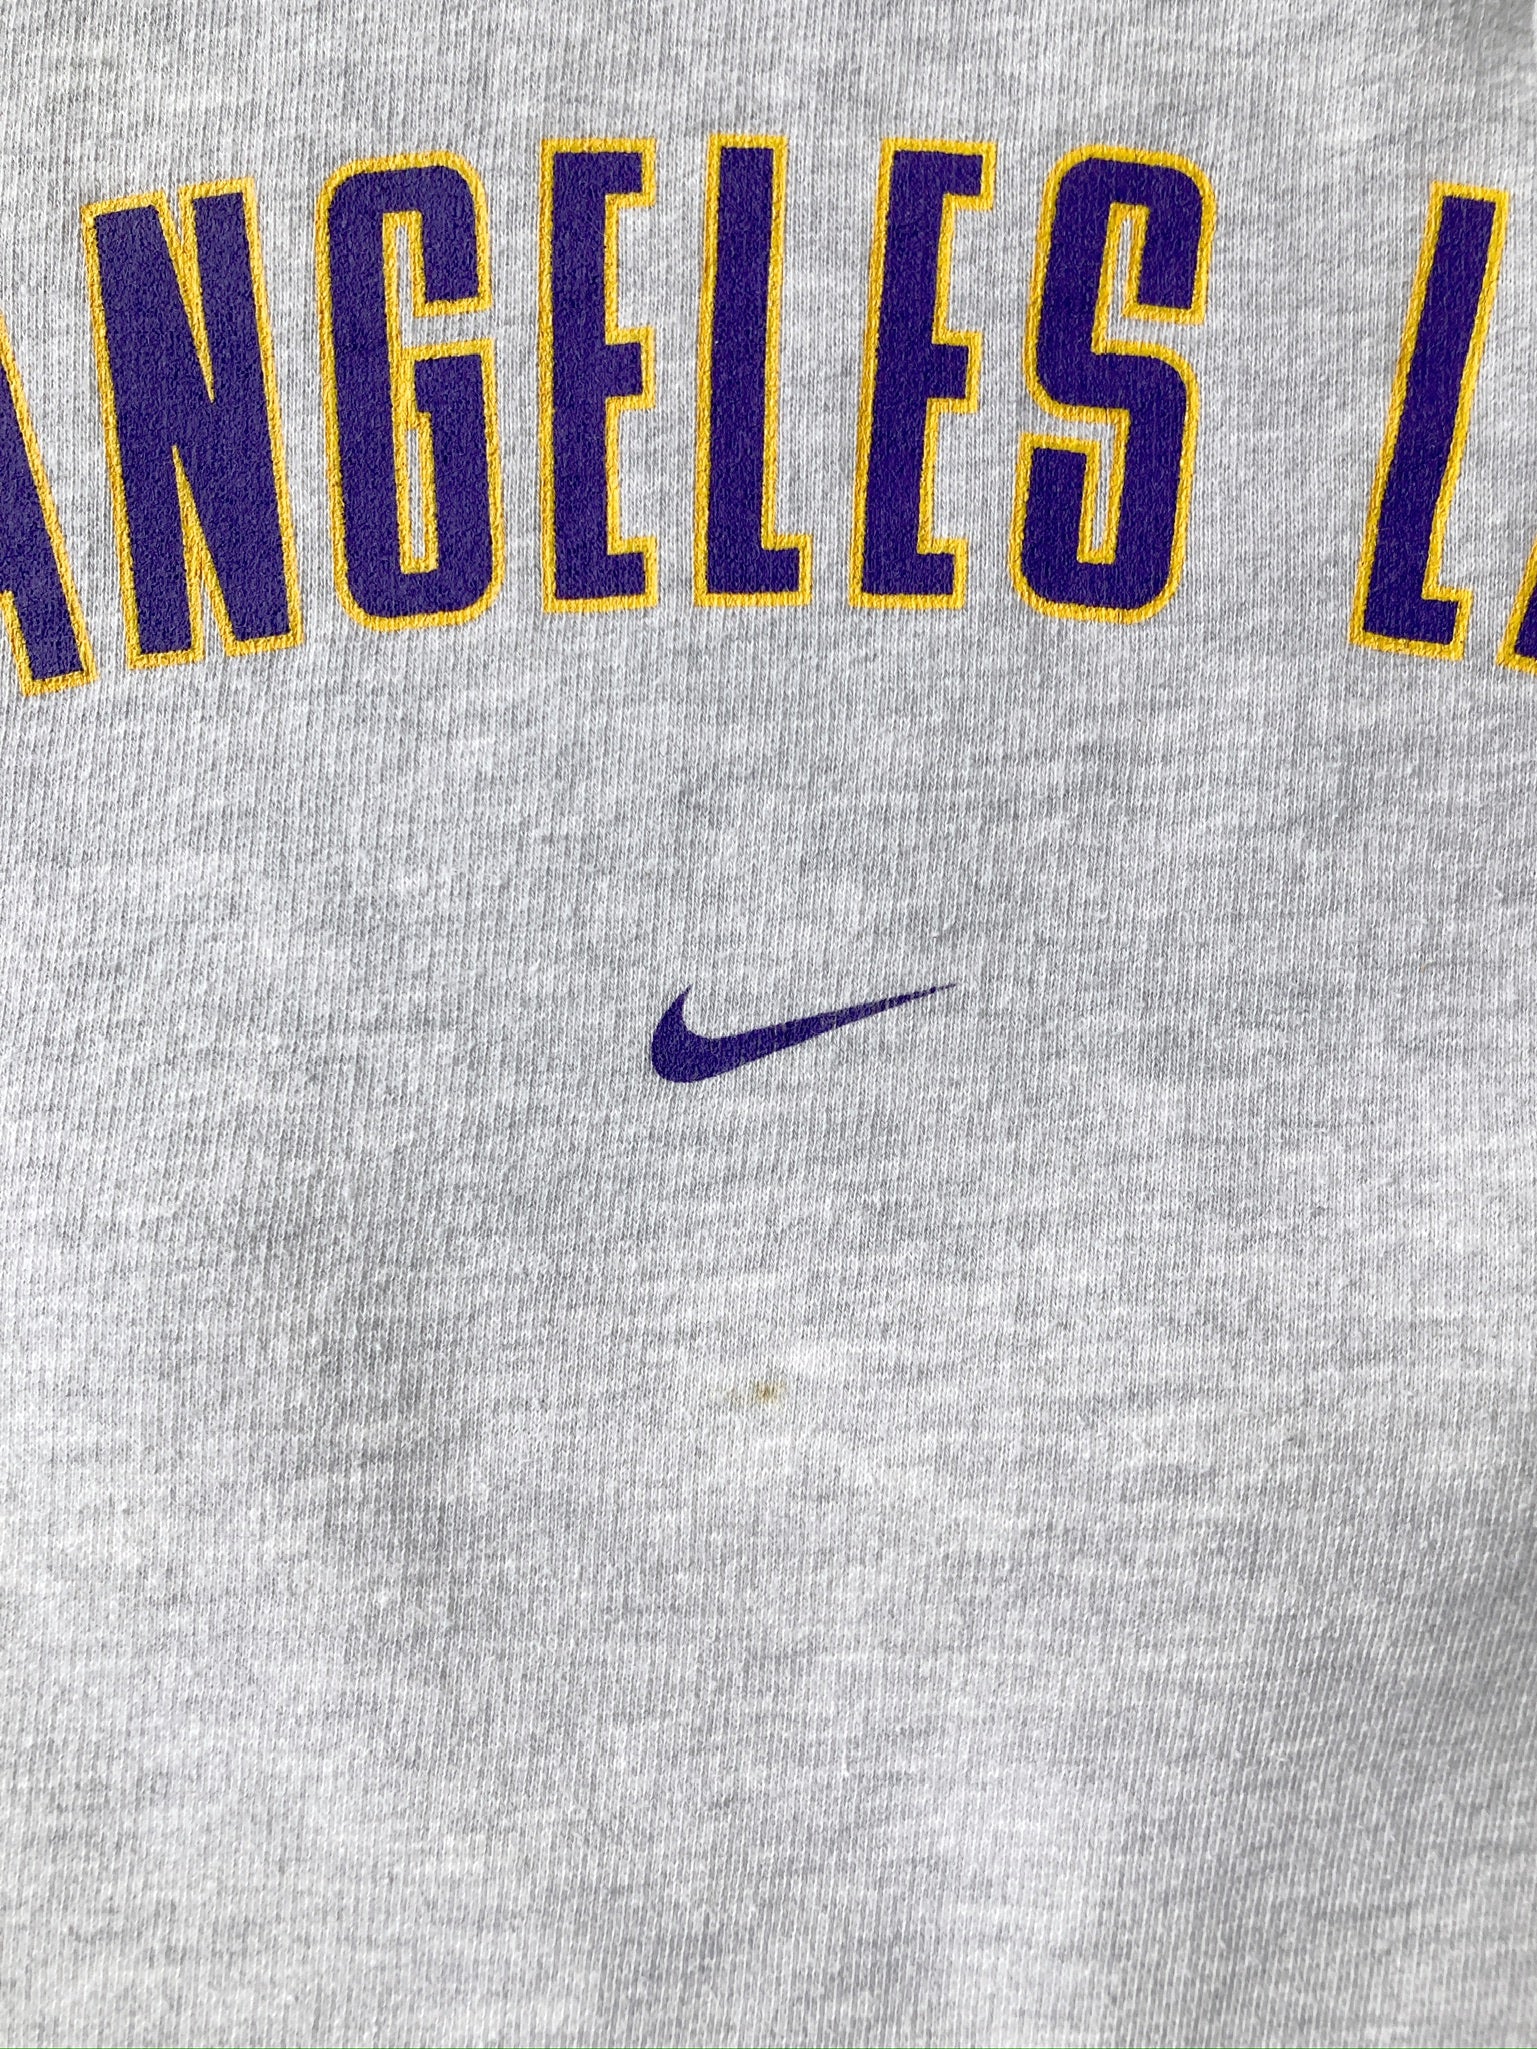 Los Angeles Lakers Nike Sweatshirt 00's - XL – Lot 1 Vintage